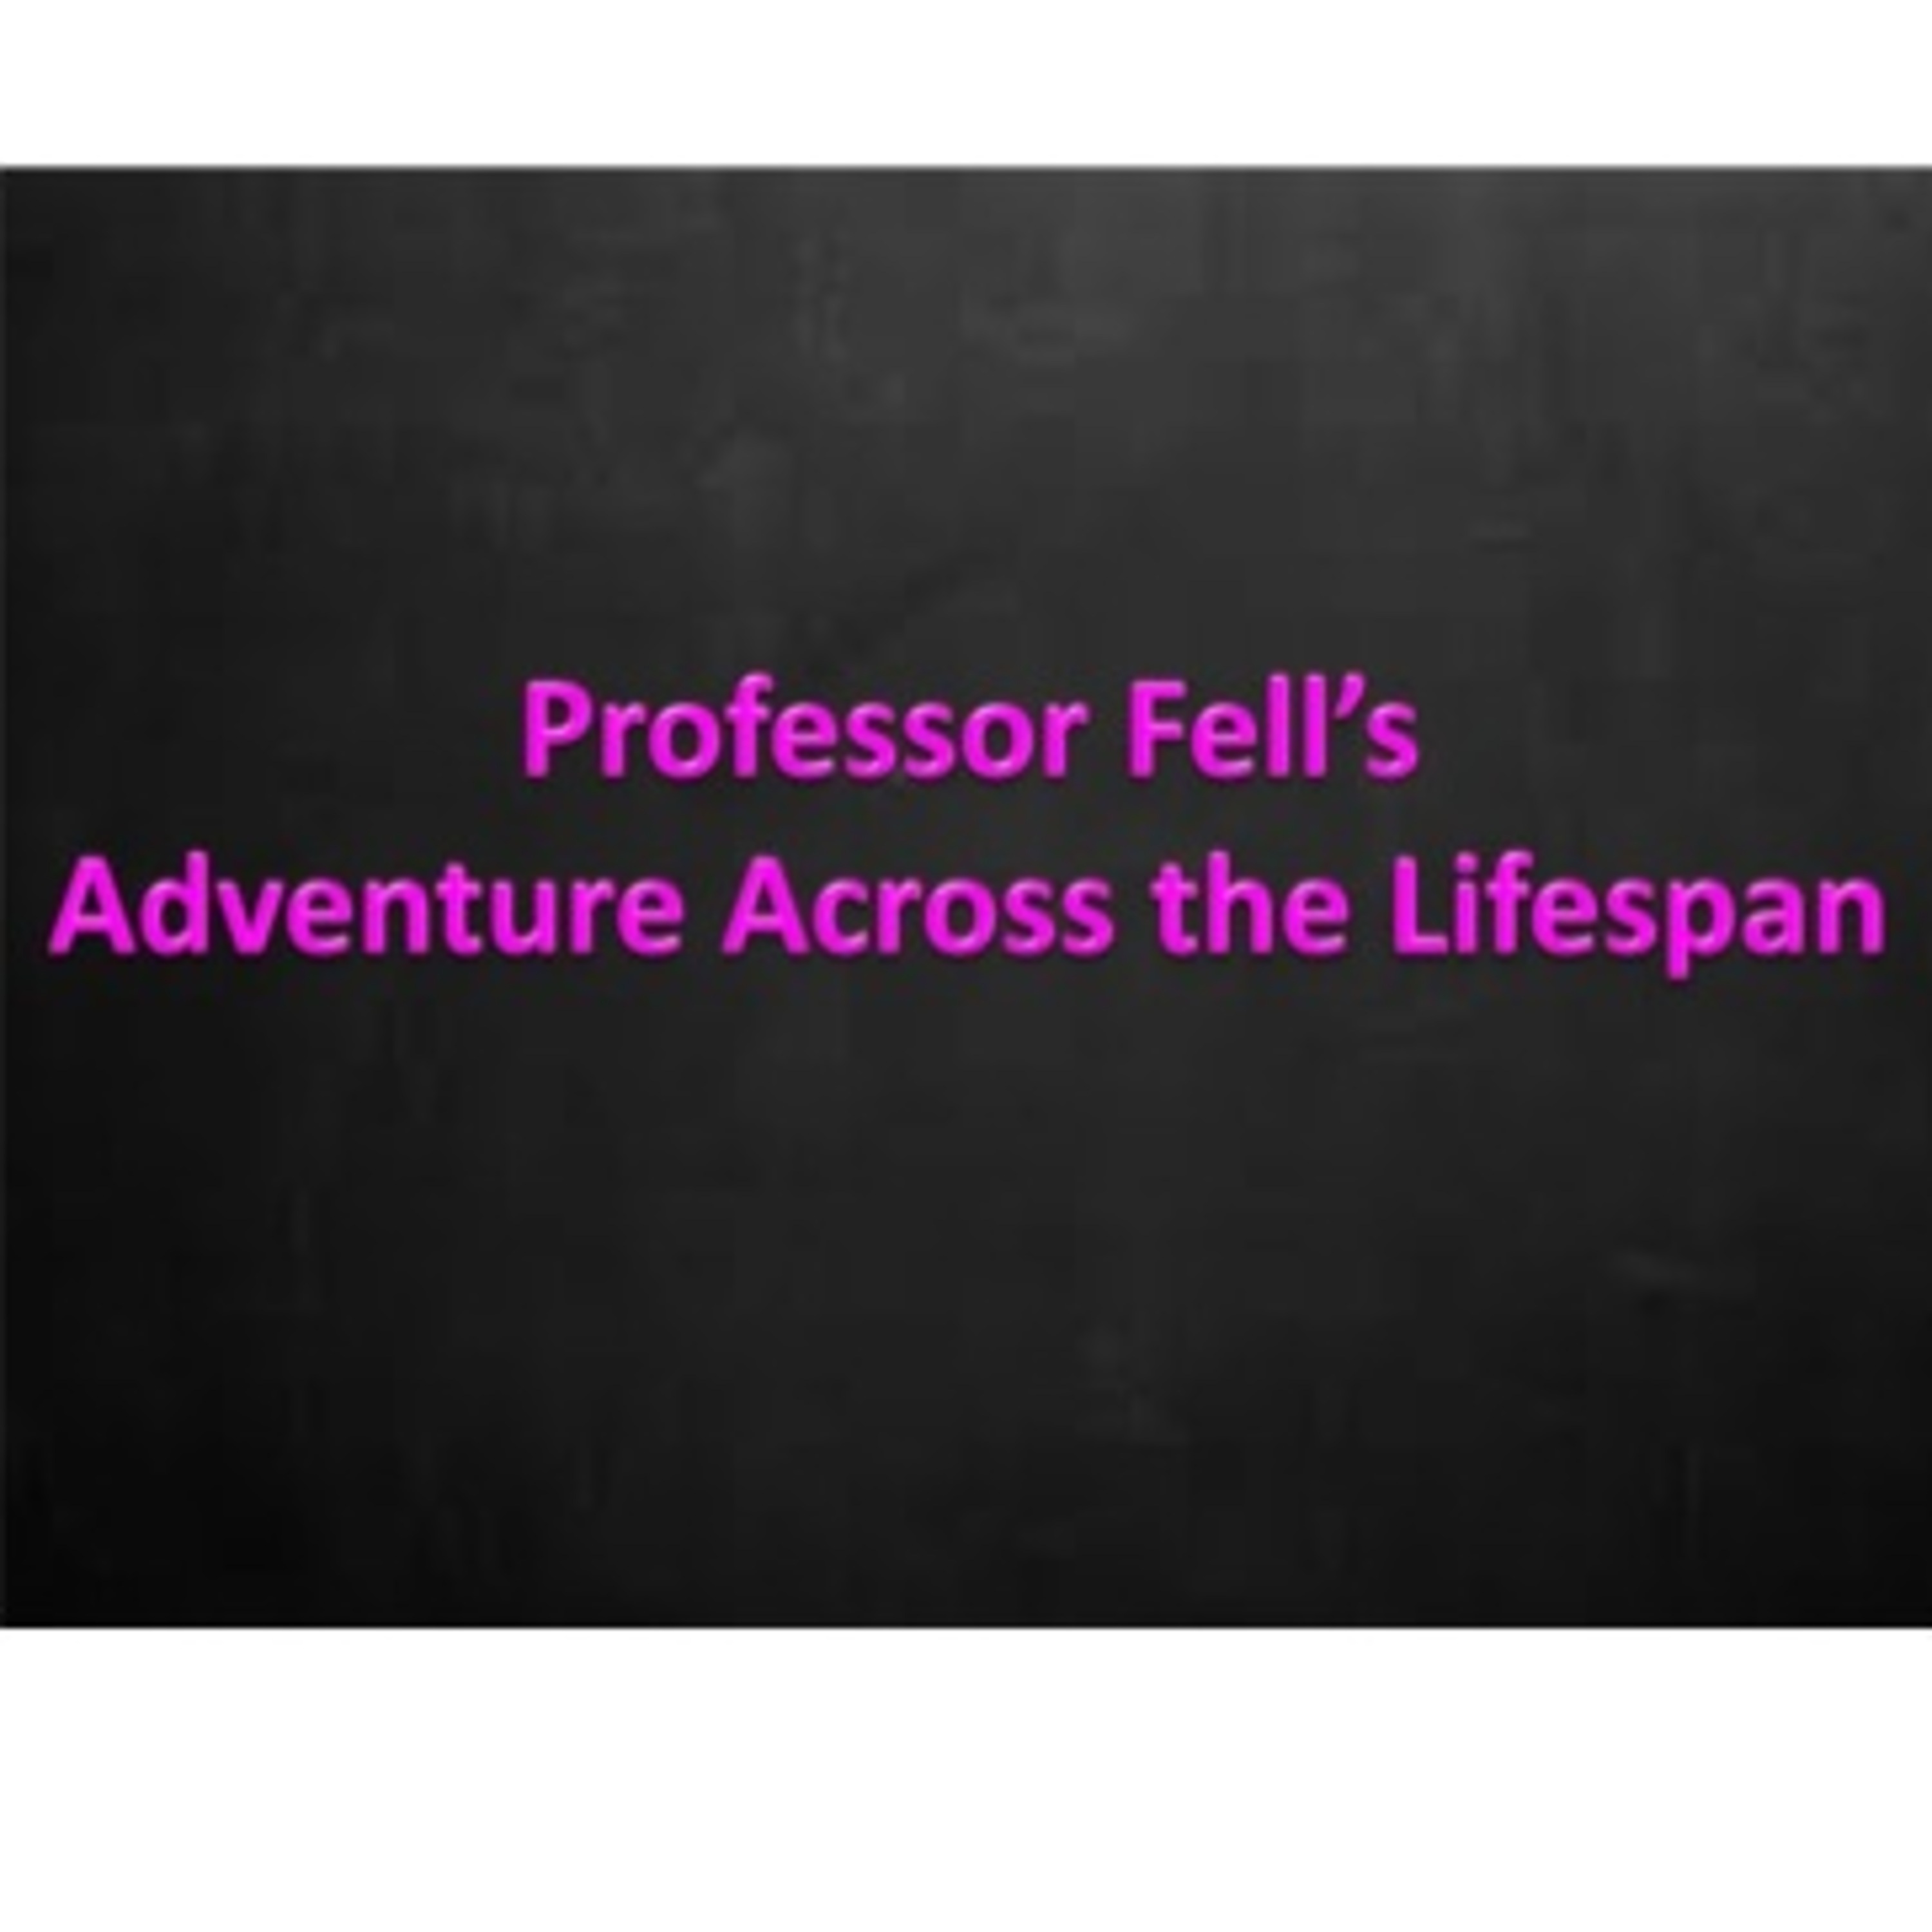 Professor Fell's Adventure Across the Lifespan